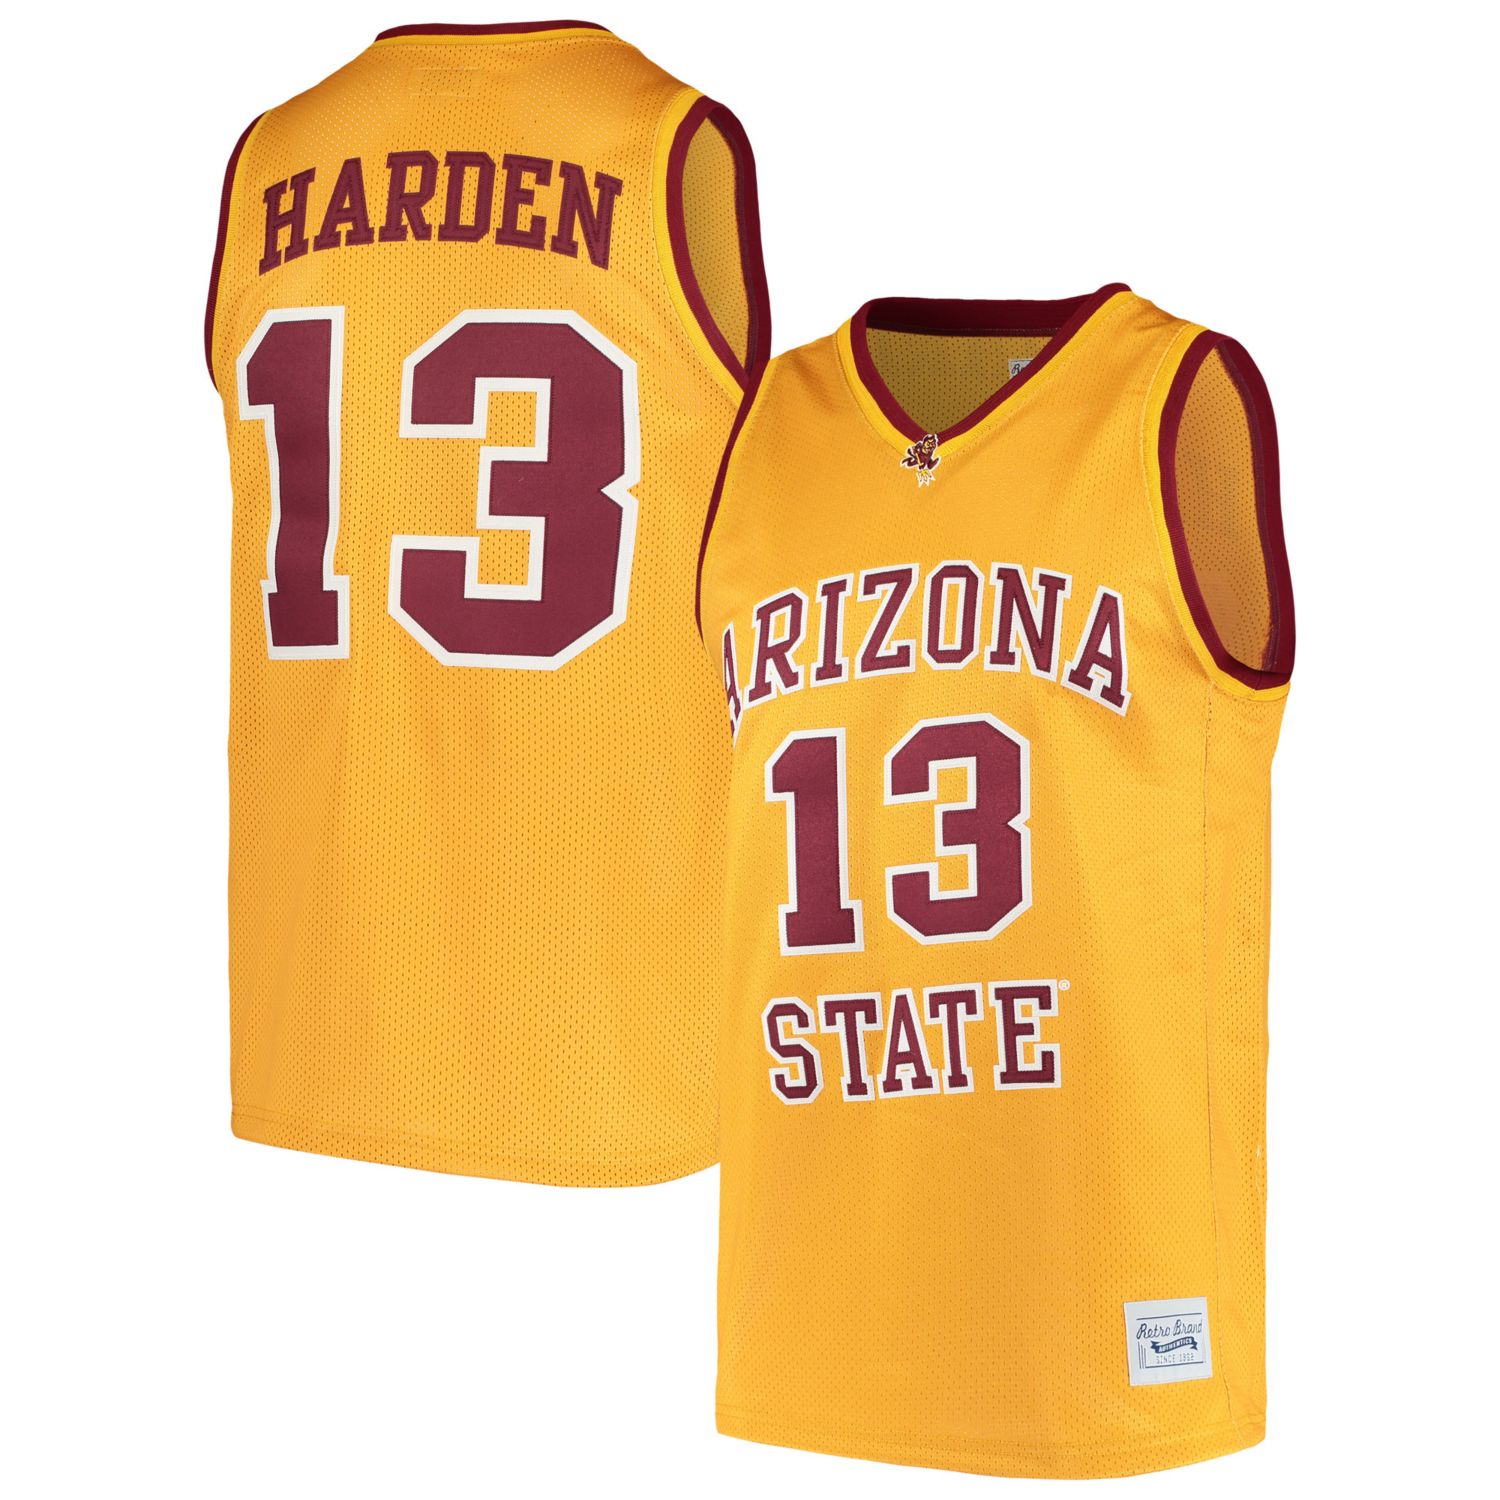 Image for Unbranded Men's Original Retro Brand James Harden Gold Arizona State Sun Devils Alumni Basketball Jersey at Kohl's.